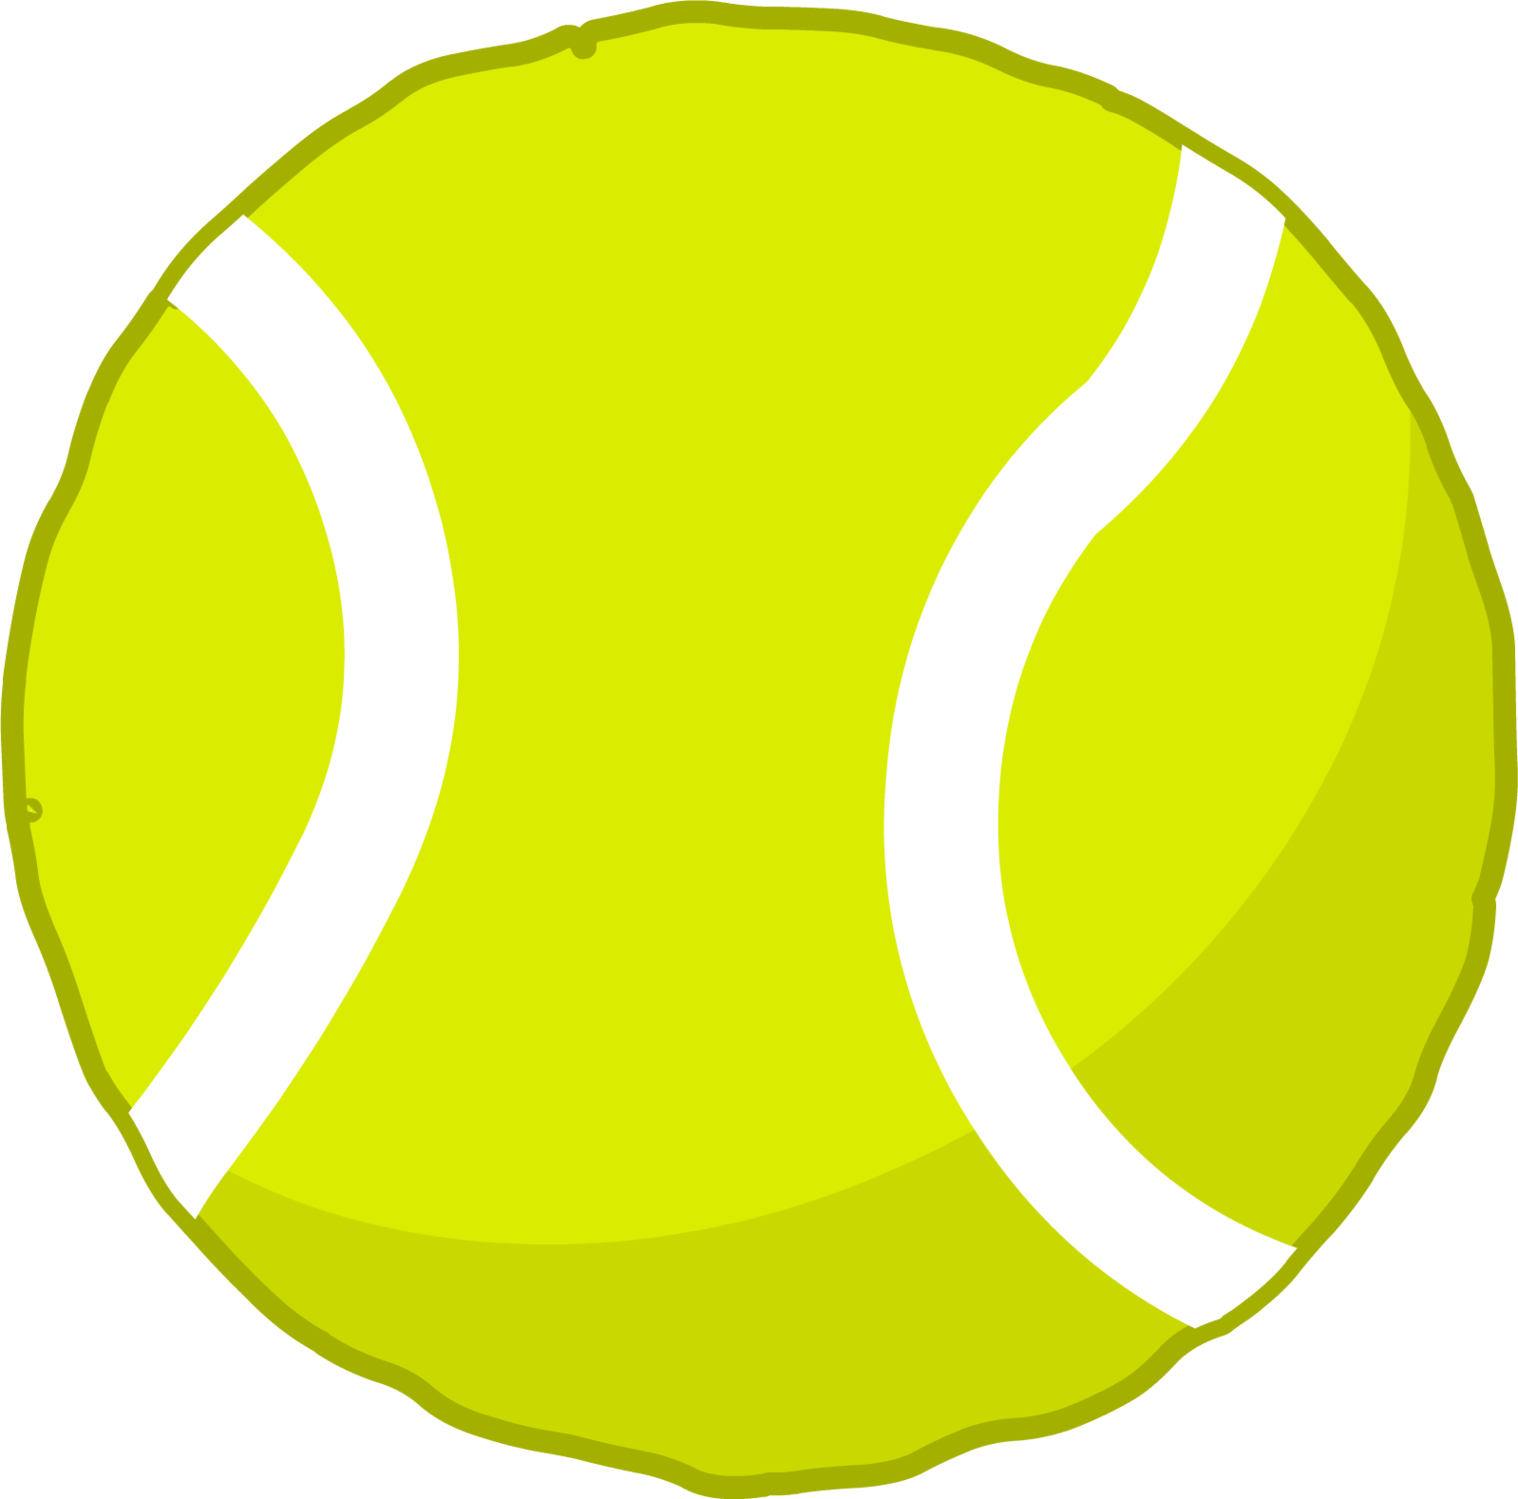 Tennis ball tennis racket and ball clipart kid 3 - Clipartix